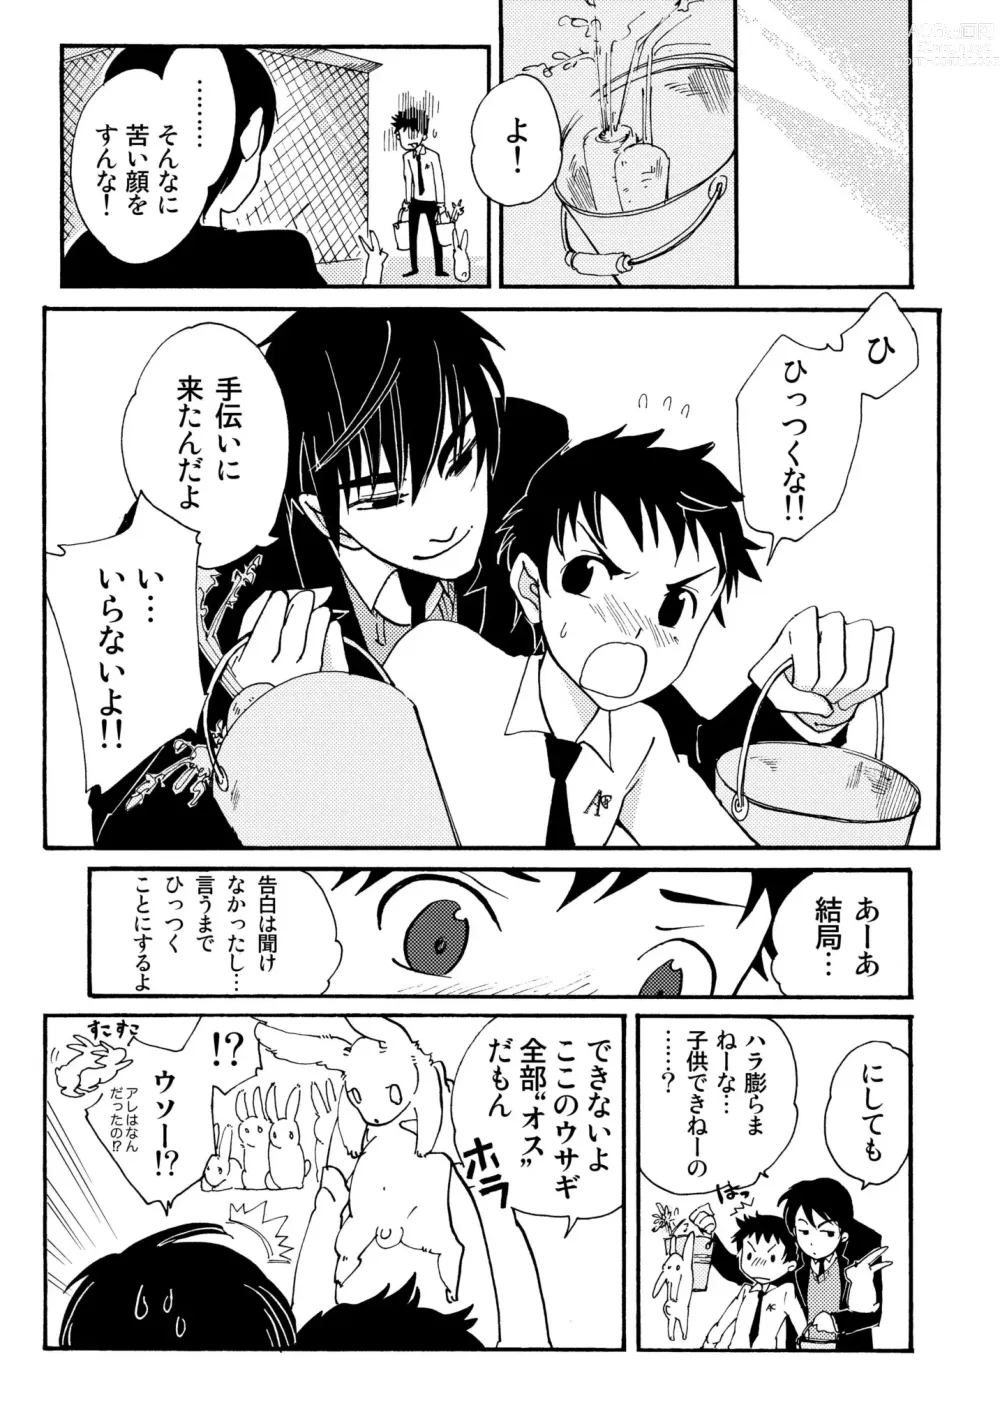 Page 23 of doujinshi Usagi no Koe